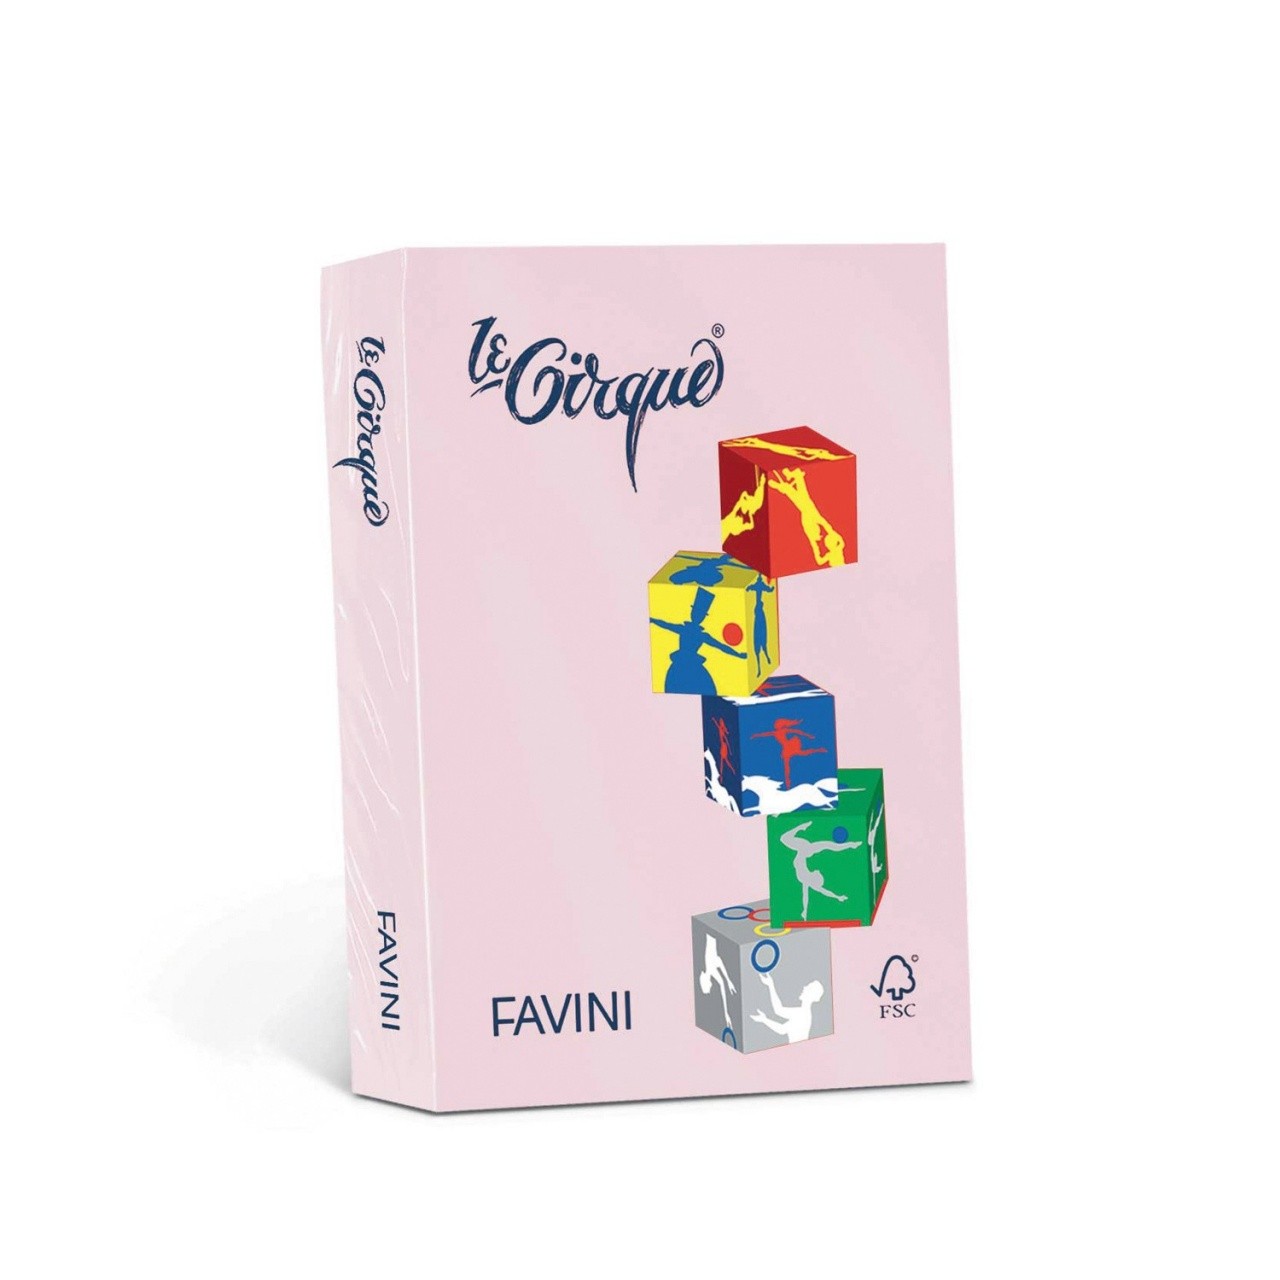 Favini Le Cirque carta inkjet A3 (297x420 mm) 500 fogli Rosa